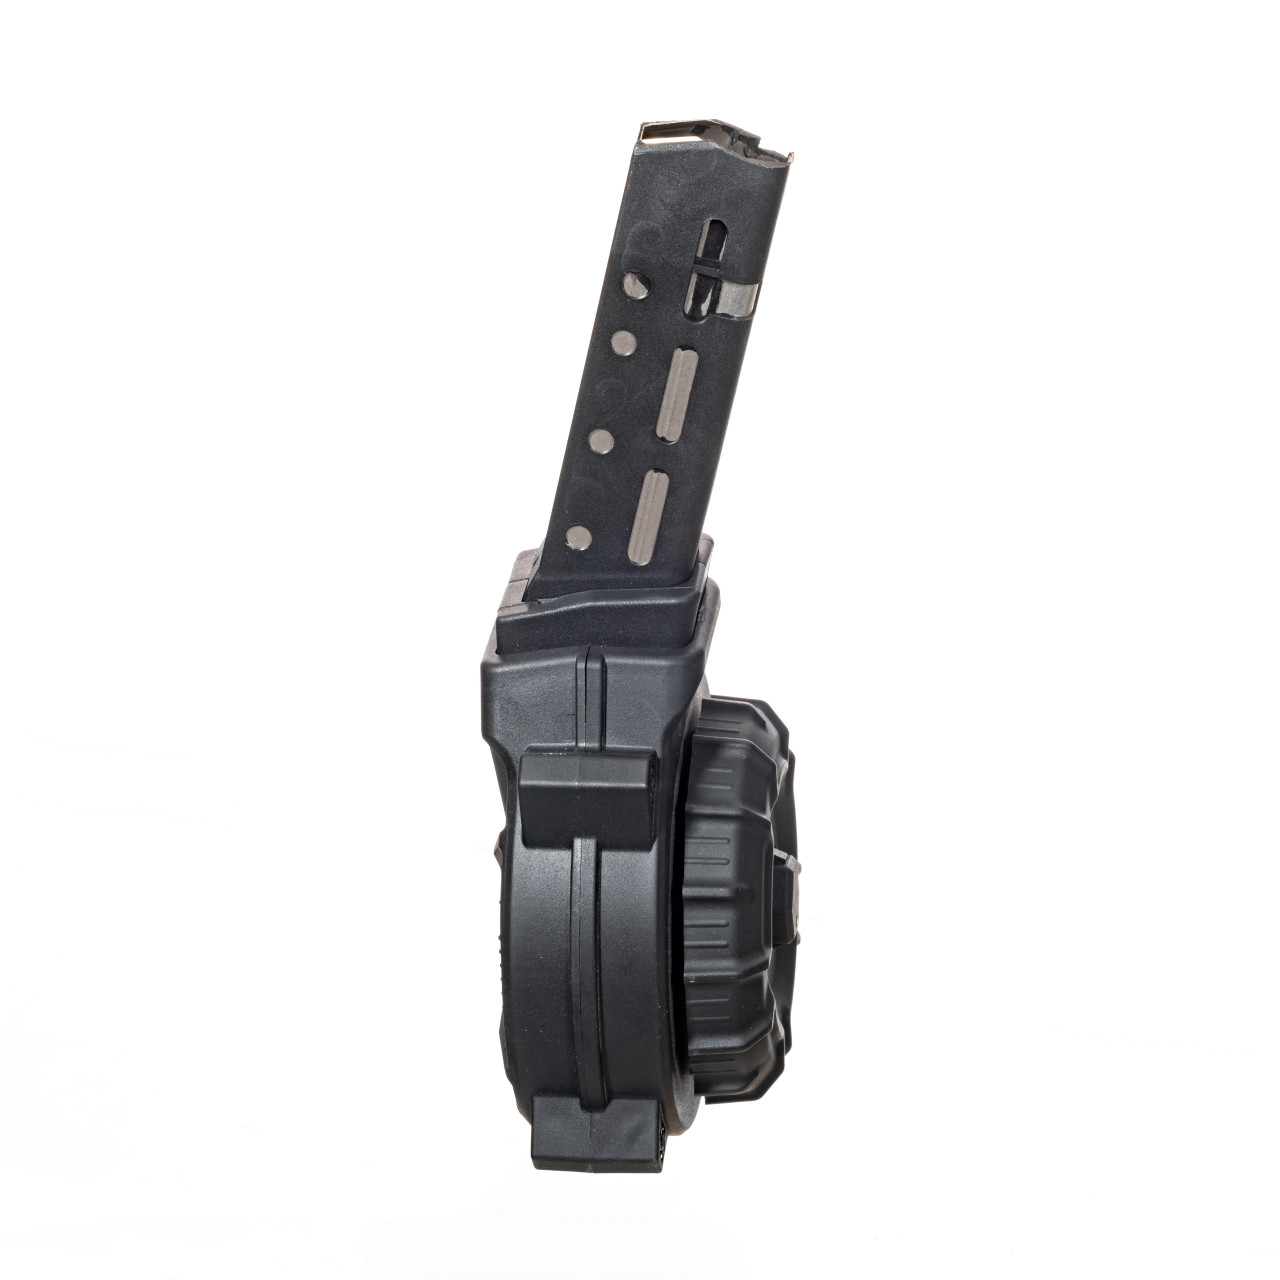 Fits the Glock®  Model 21 / 30  .45 ACP (40) Rd - Black Polymer Drum